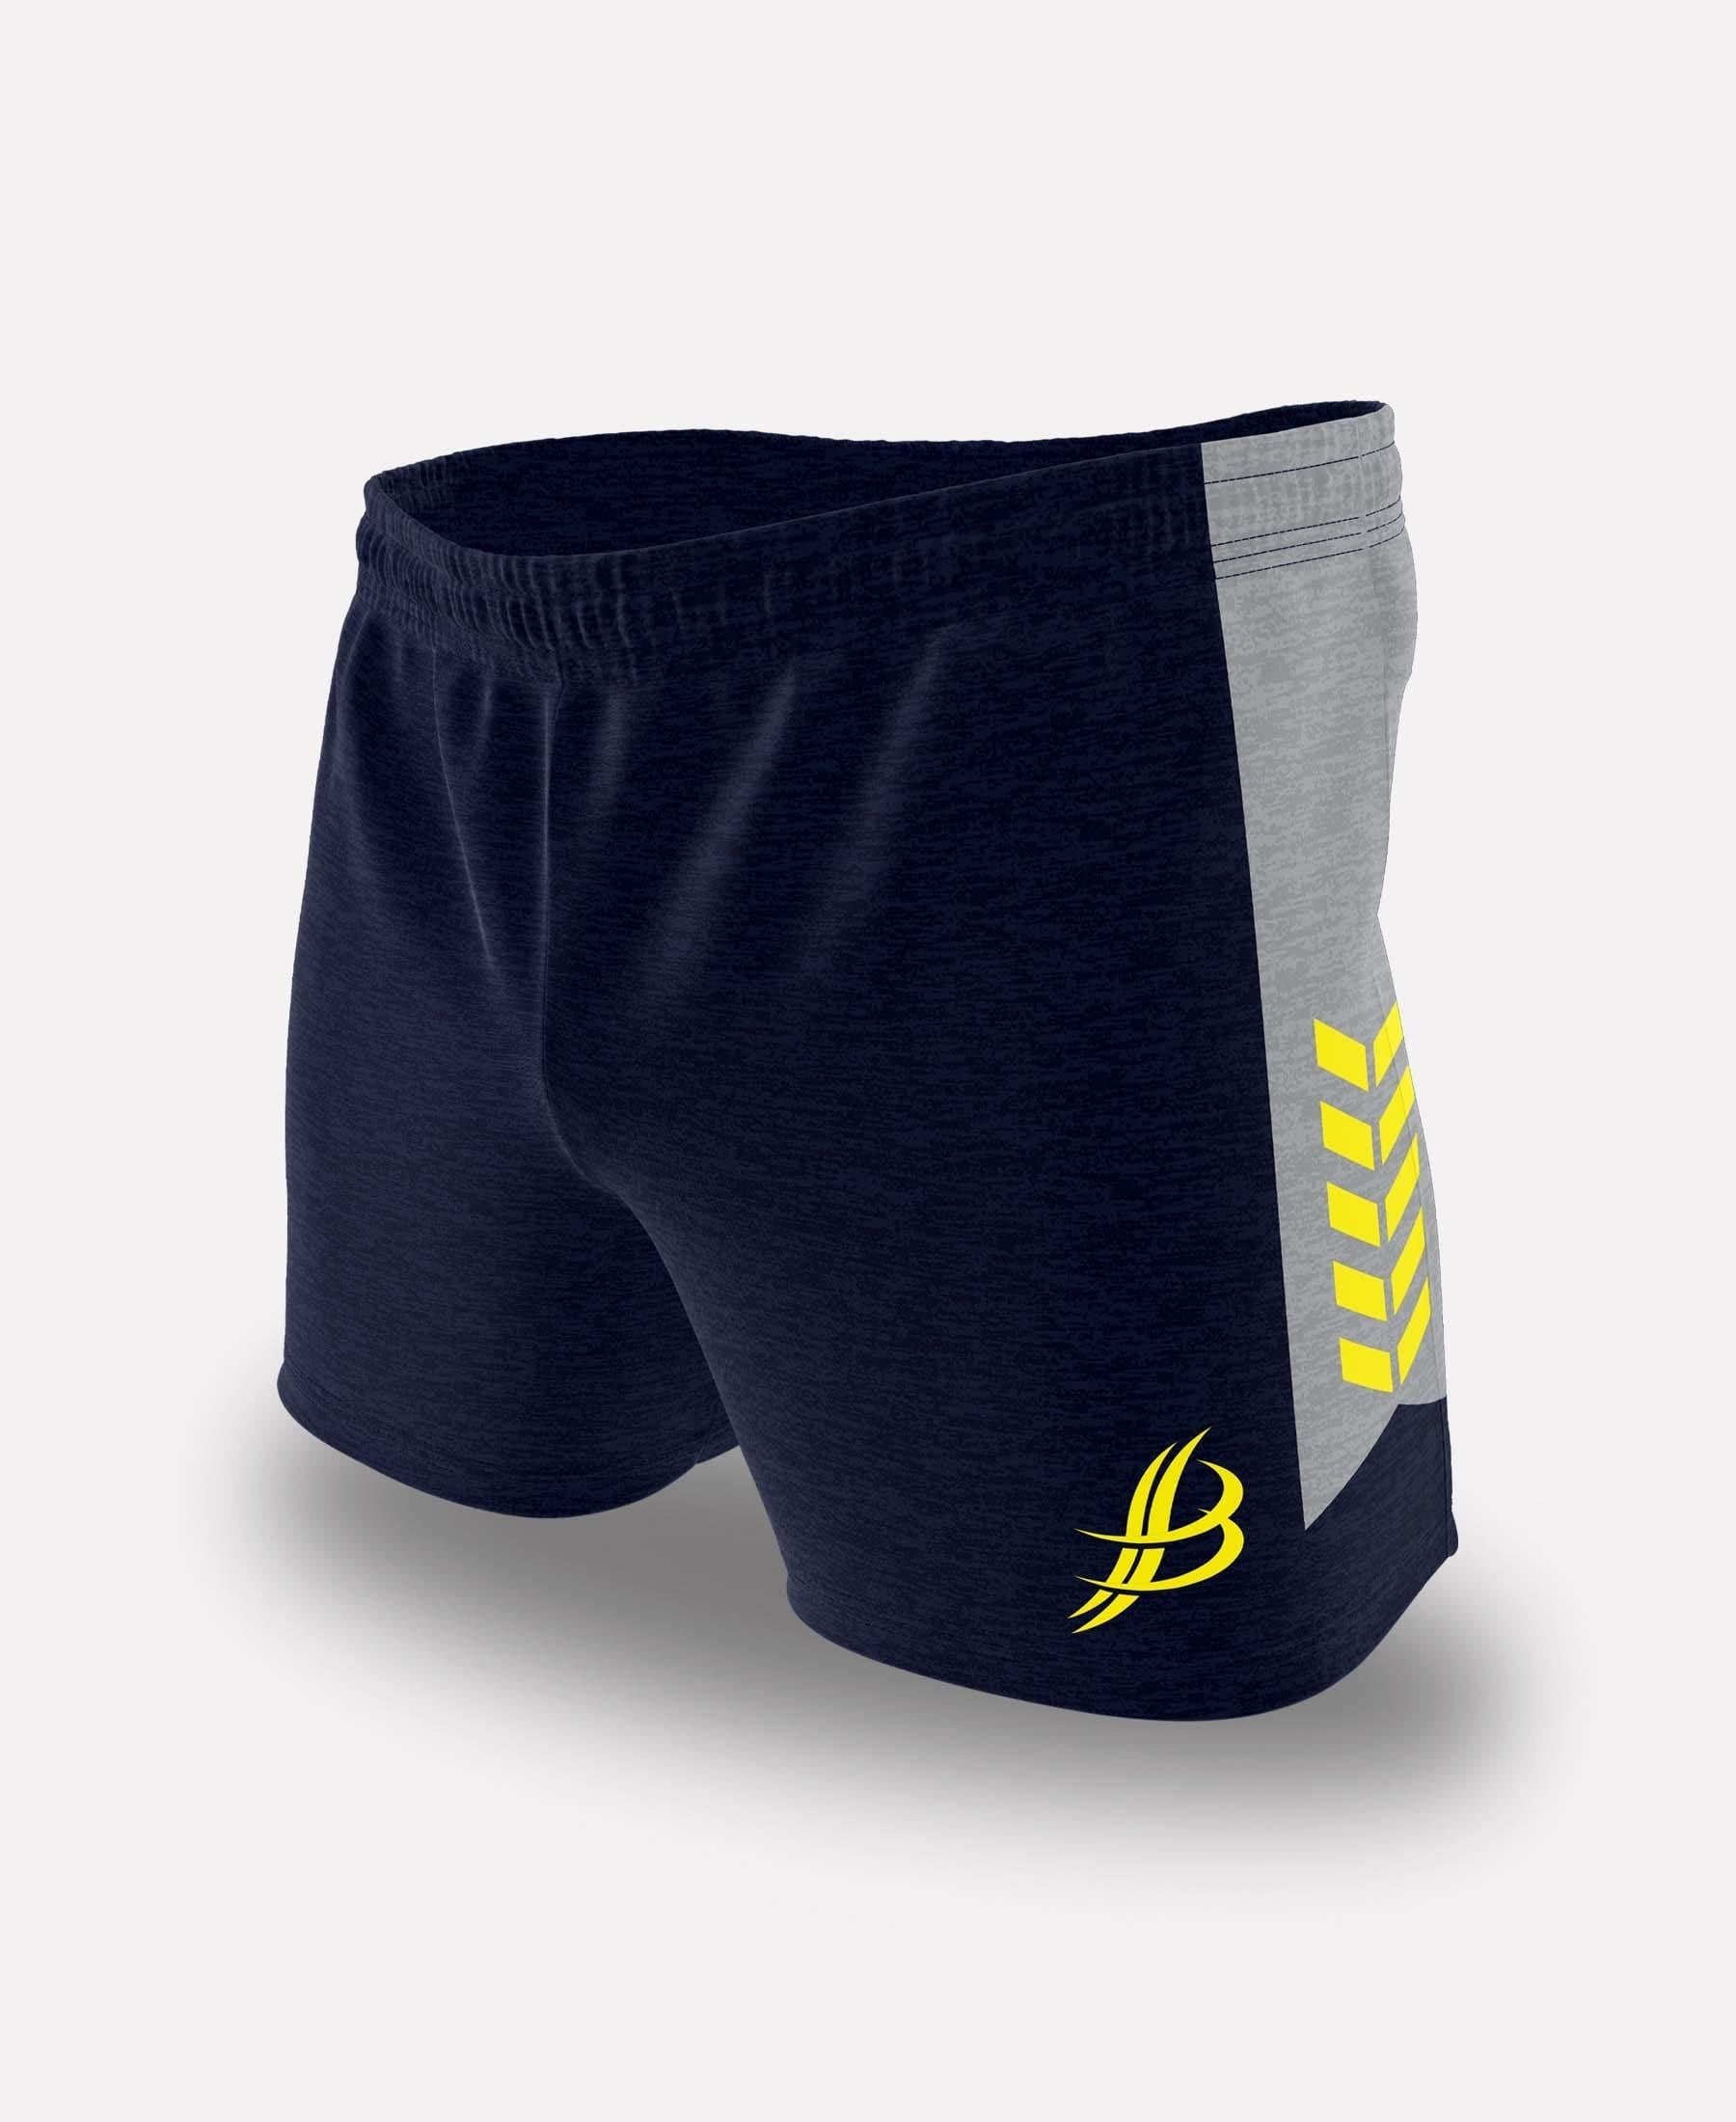 BUA20 Shorts (Navy/Grey/Lemon) - Bourke Sports Limited